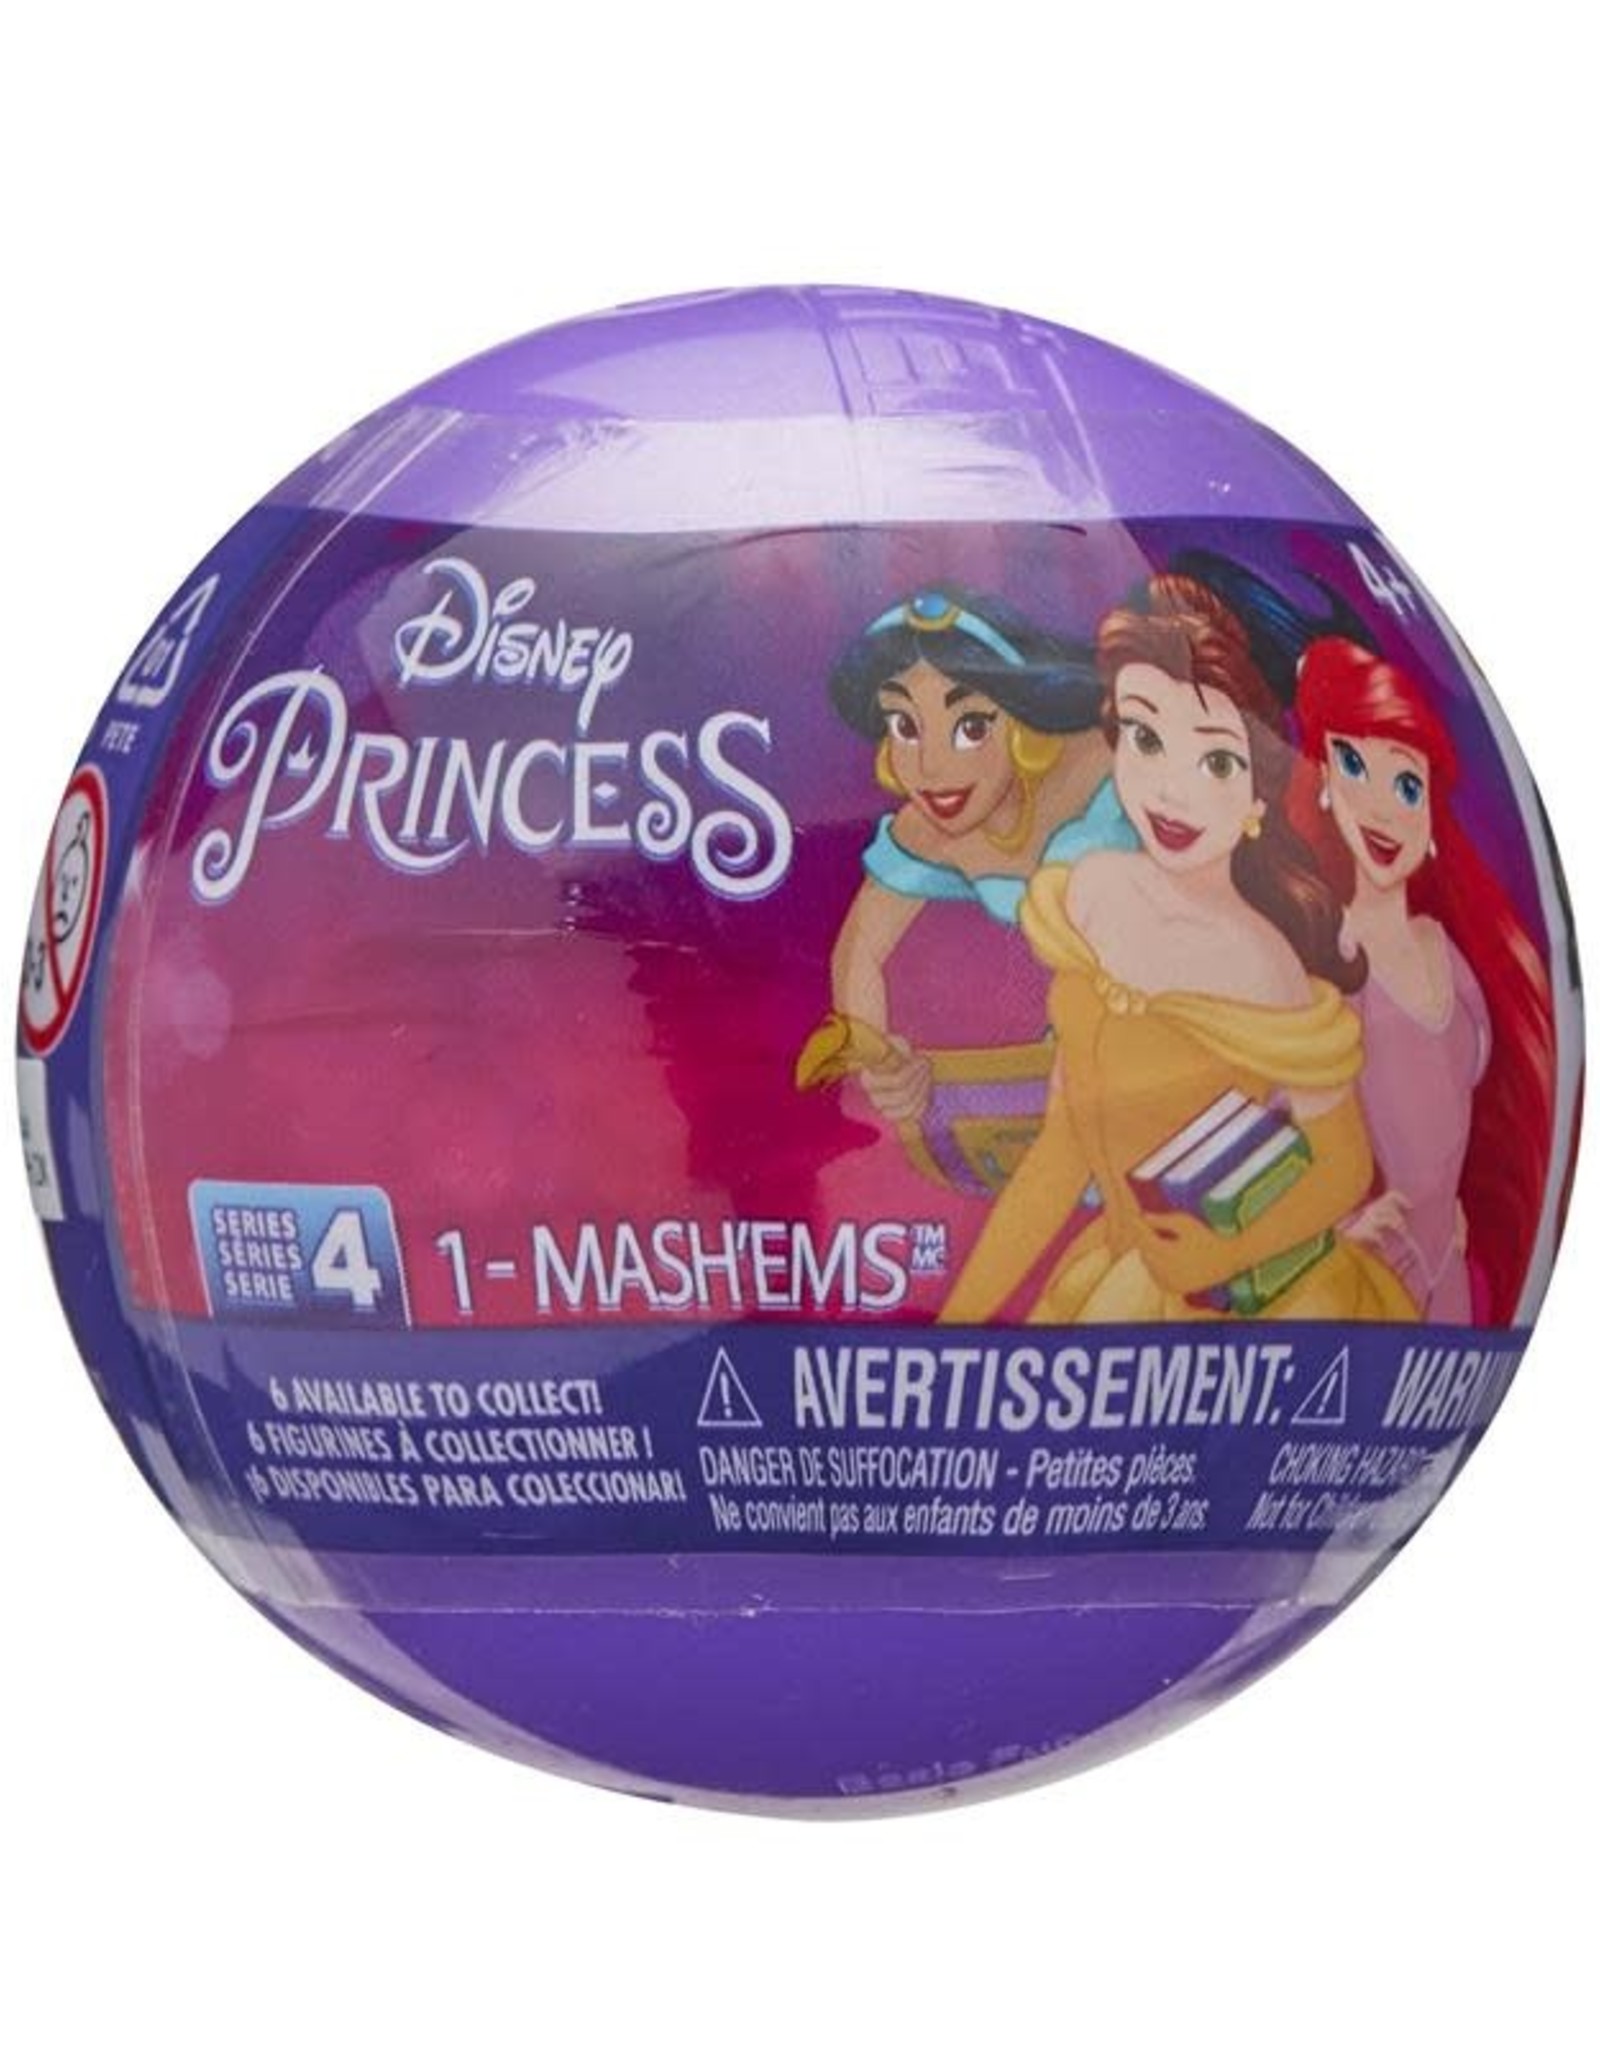 Disney Princess Mash'ems Series 4